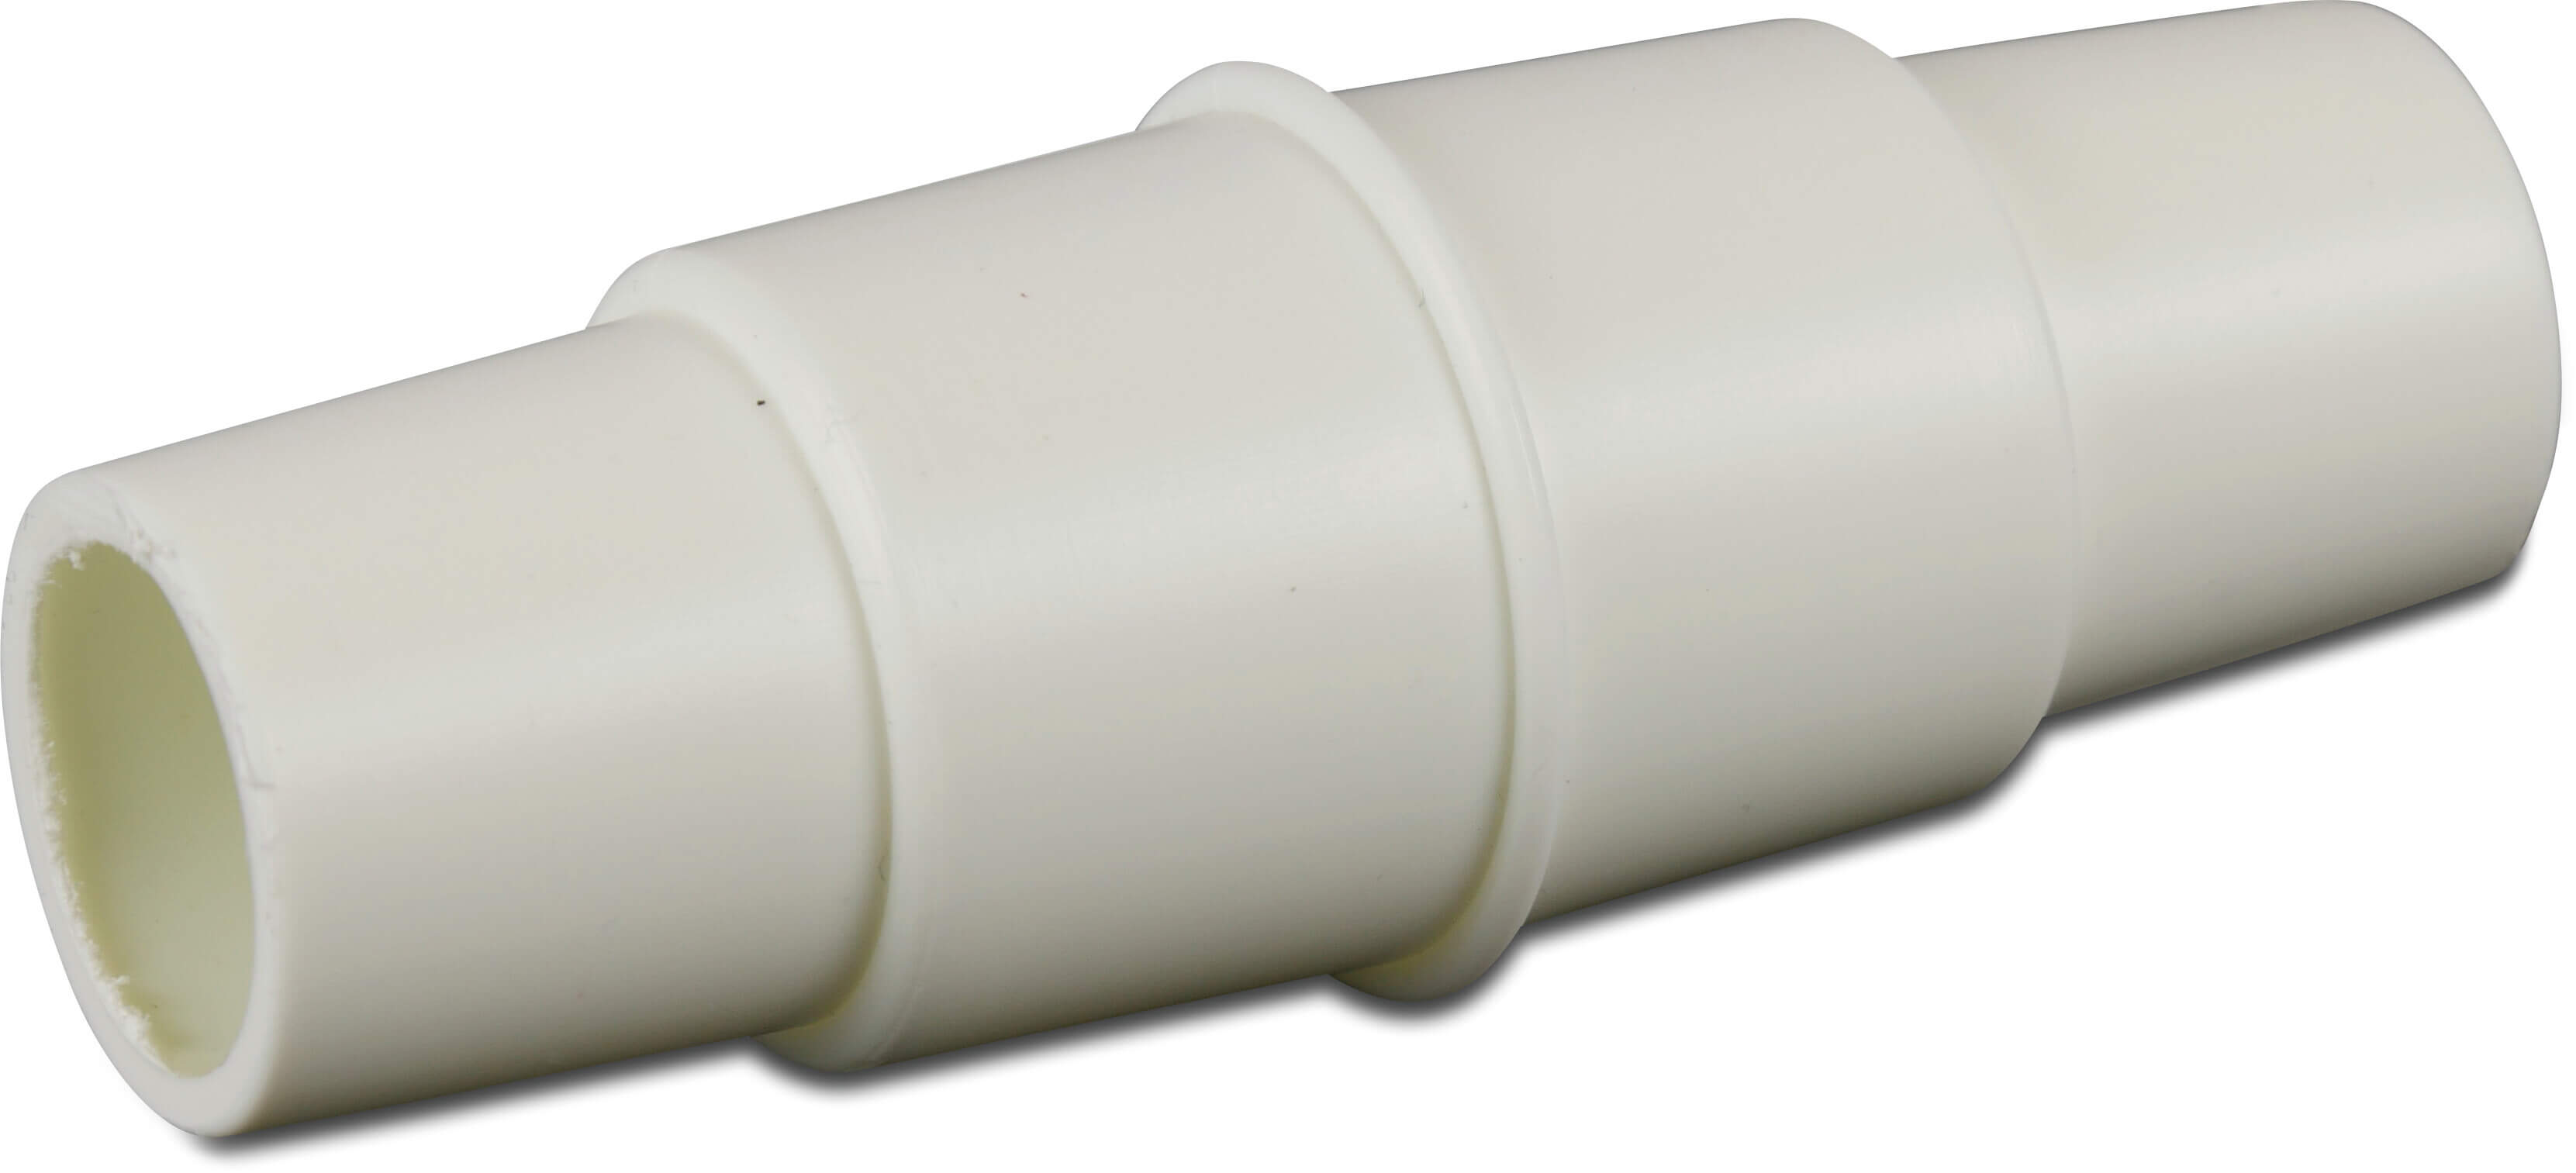 Profec Vacuum hose reducer 1 1/2" x 1 1/4" imperial glue spigot